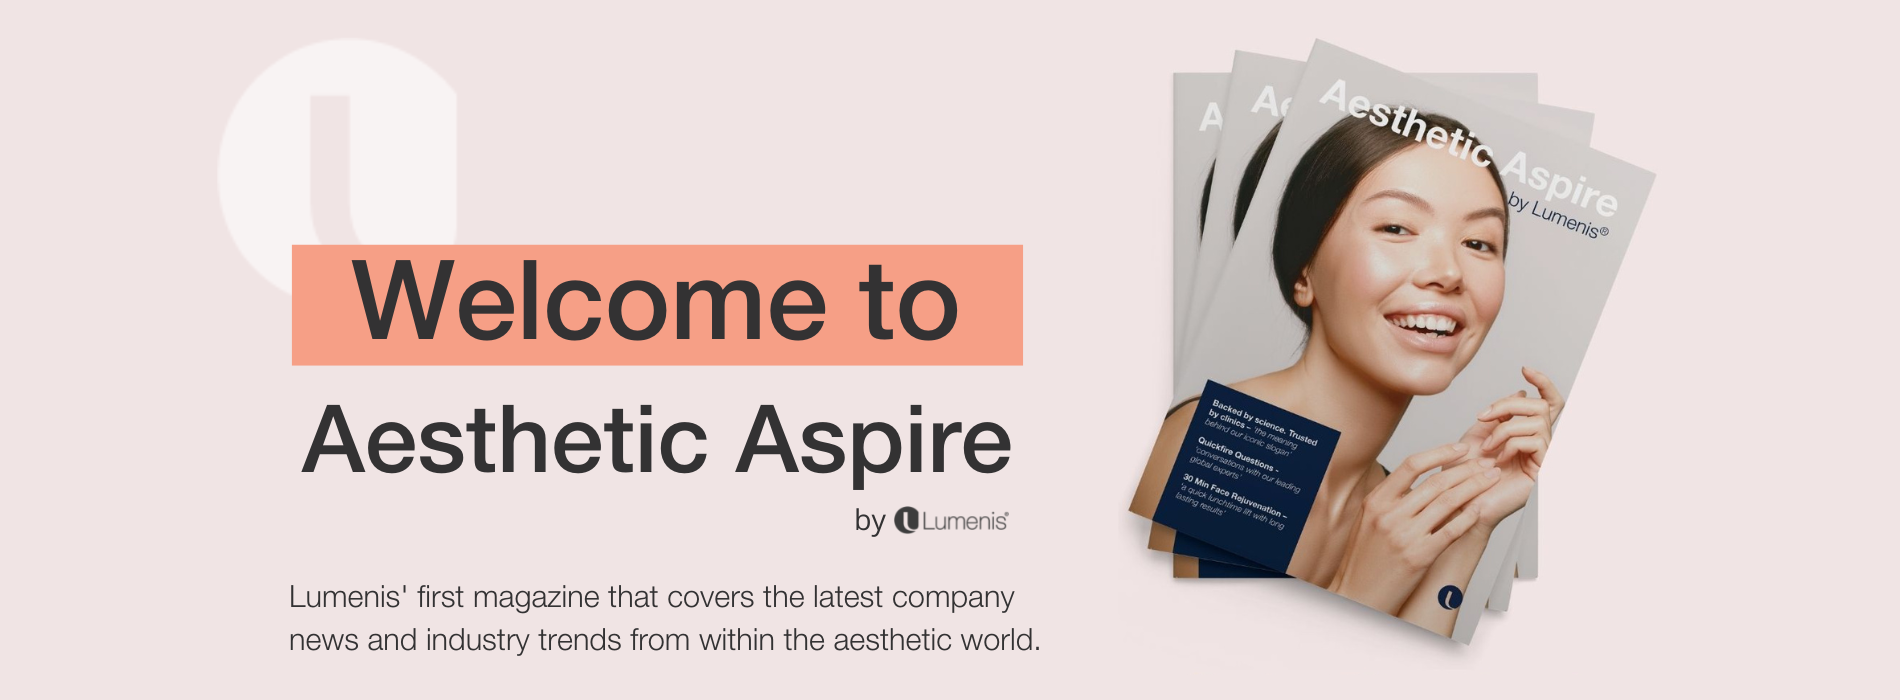 Introducing Aesthetic Aspire LP 